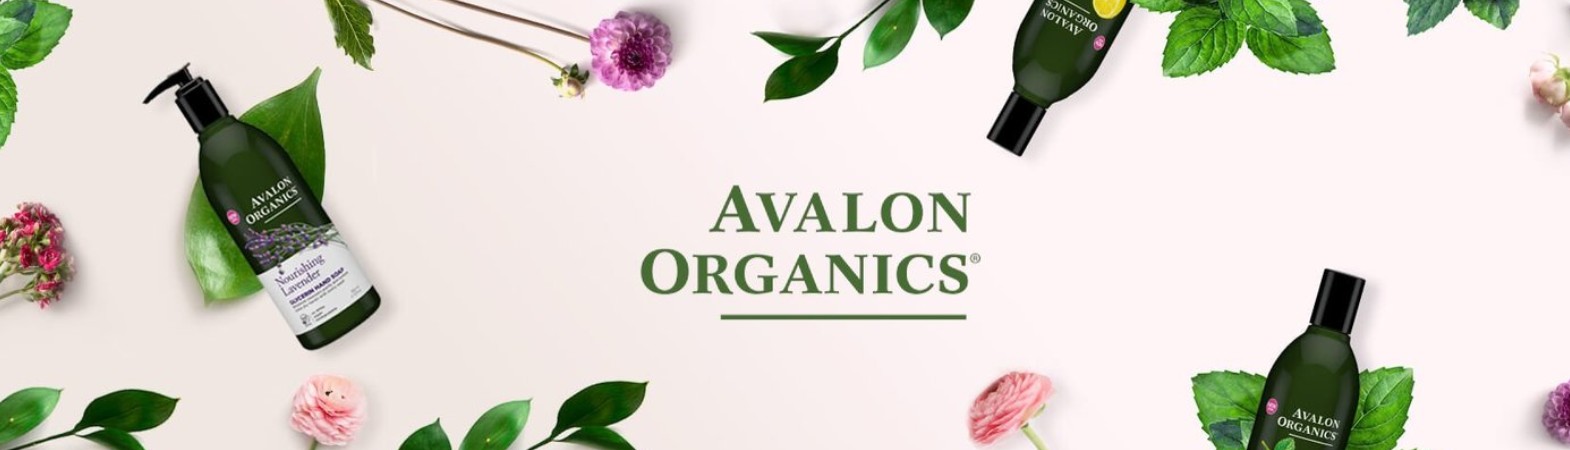 Avalon Organics - ΜΑΛΛΙΑ